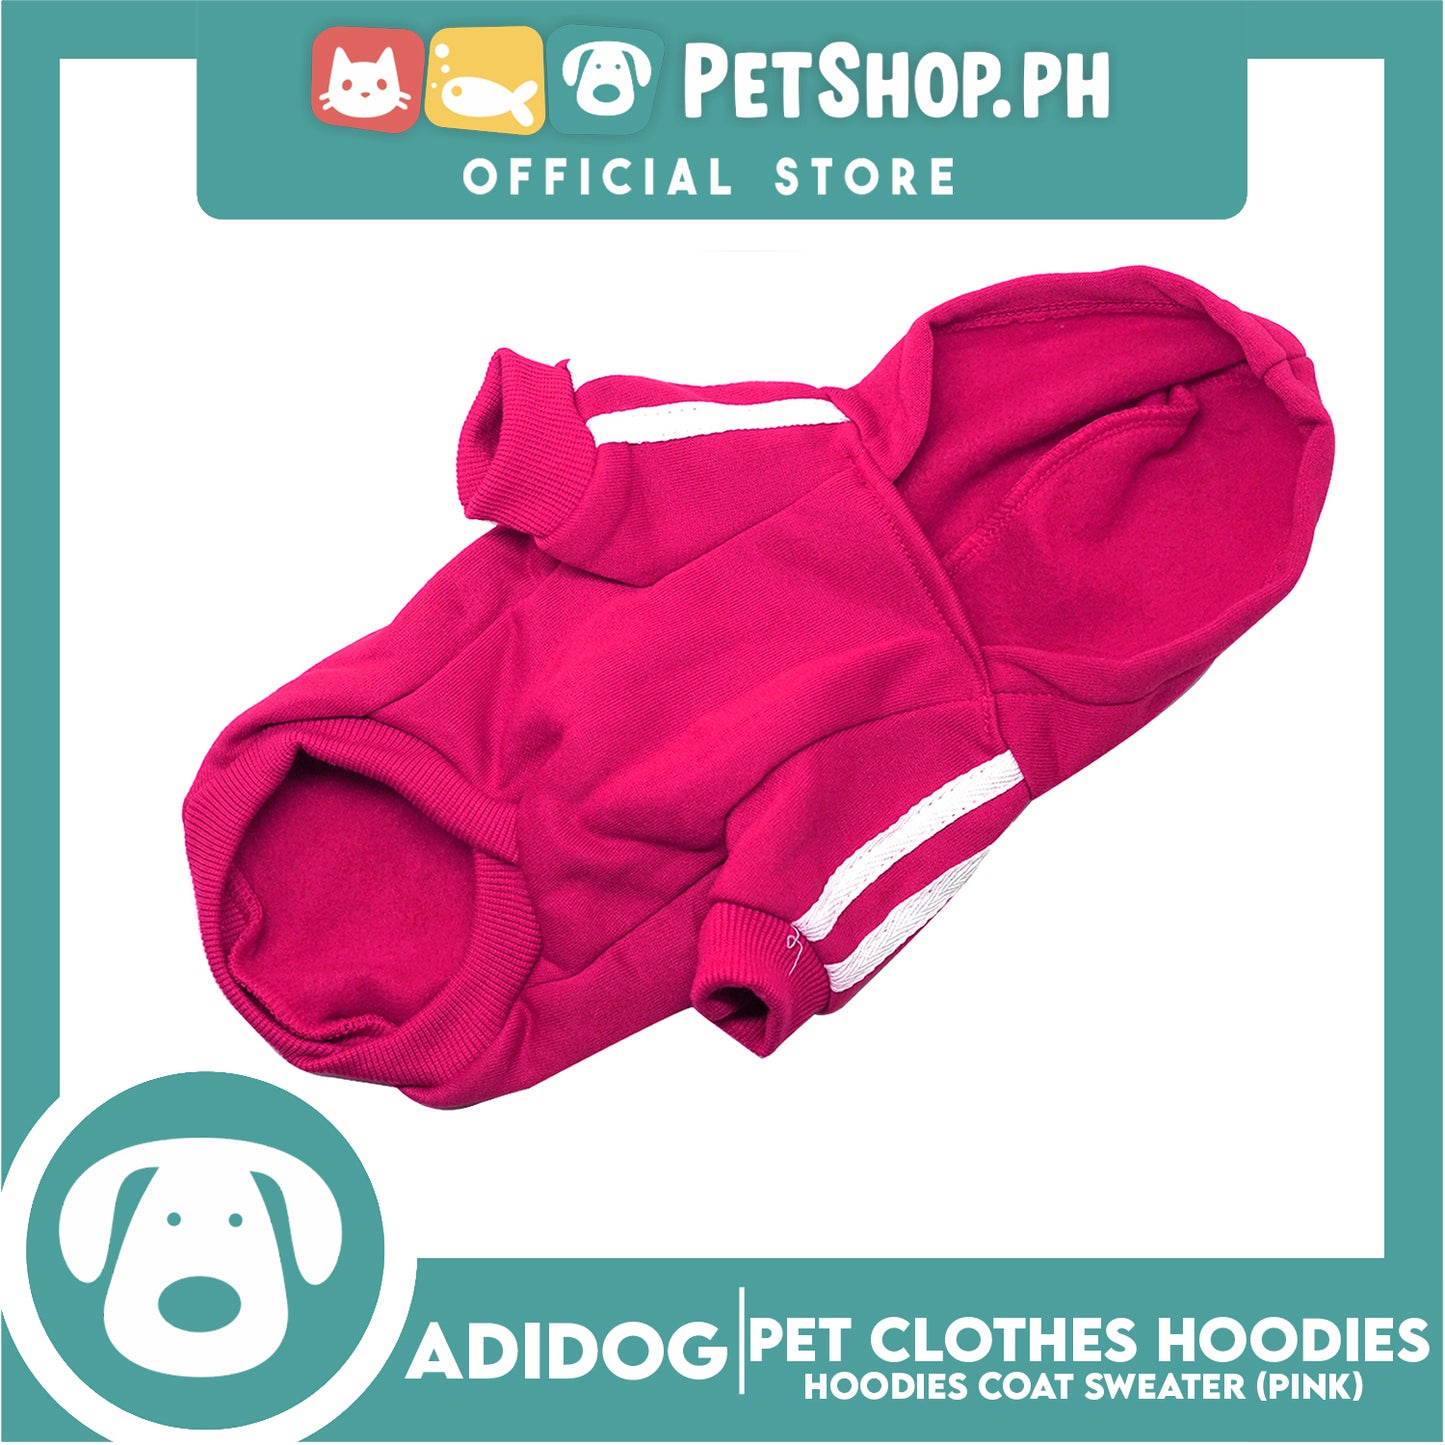 Adidog Pet Clothes Hoodies, Cute Warm Winter Hoodies Coat Sweater (Pink) Medium